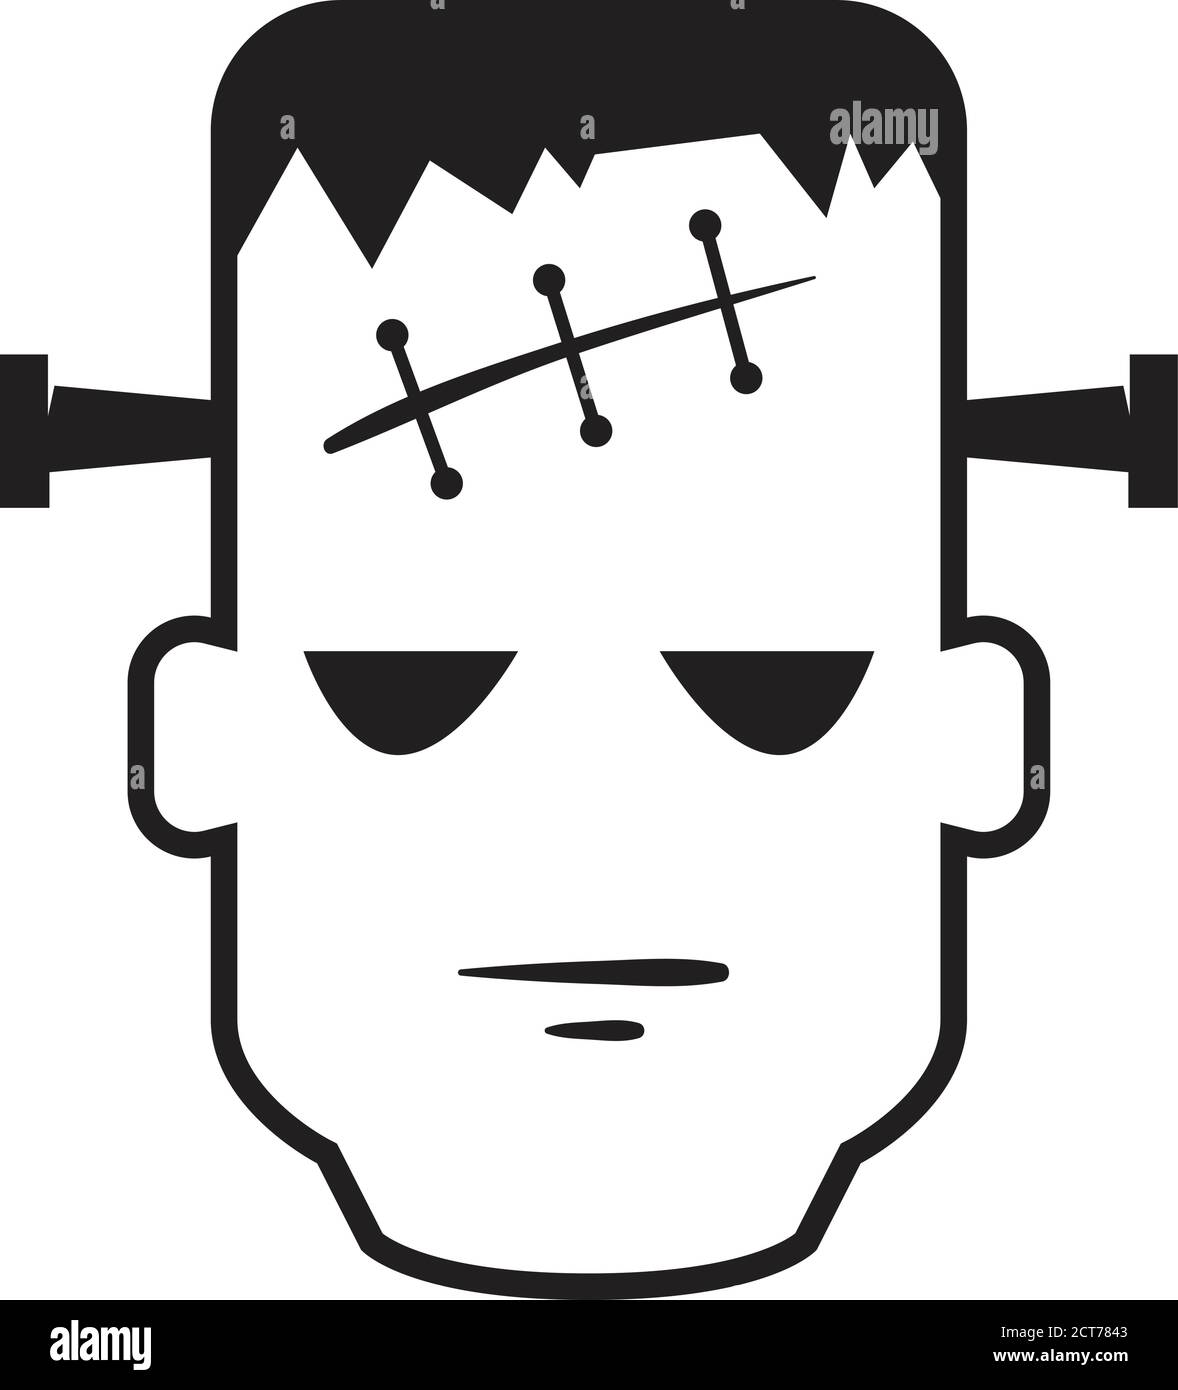 Frankenstein head icon in black and white. Vector illustration. Stock Vector